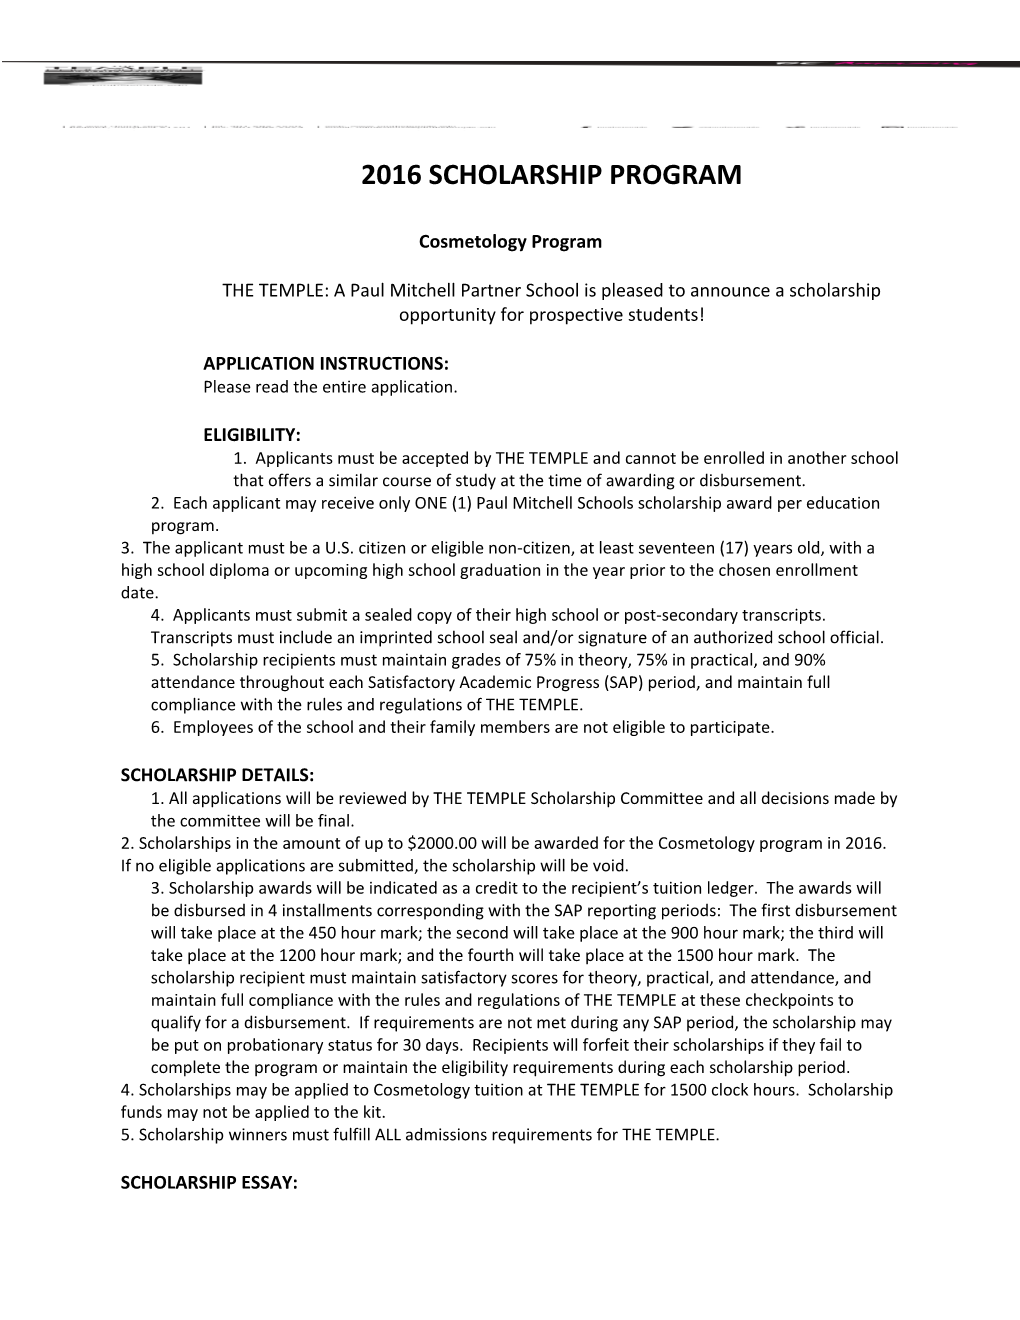 2016 Scholarship Program